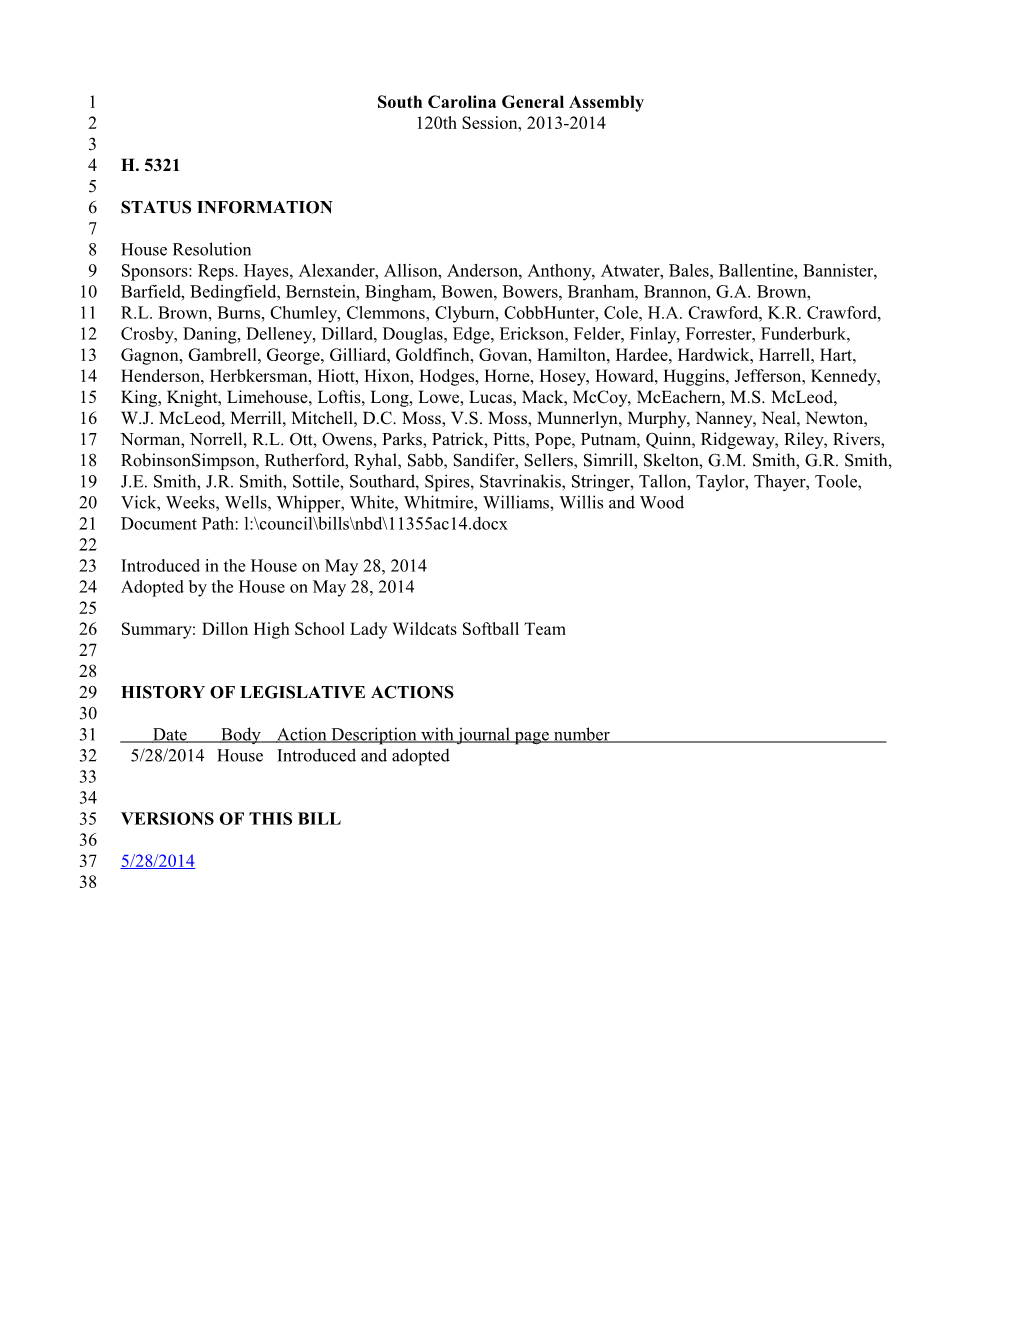 2013-2014 Bill 5321: Dillon High School Lady Wildcats Softball Team - South Carolina Legislature